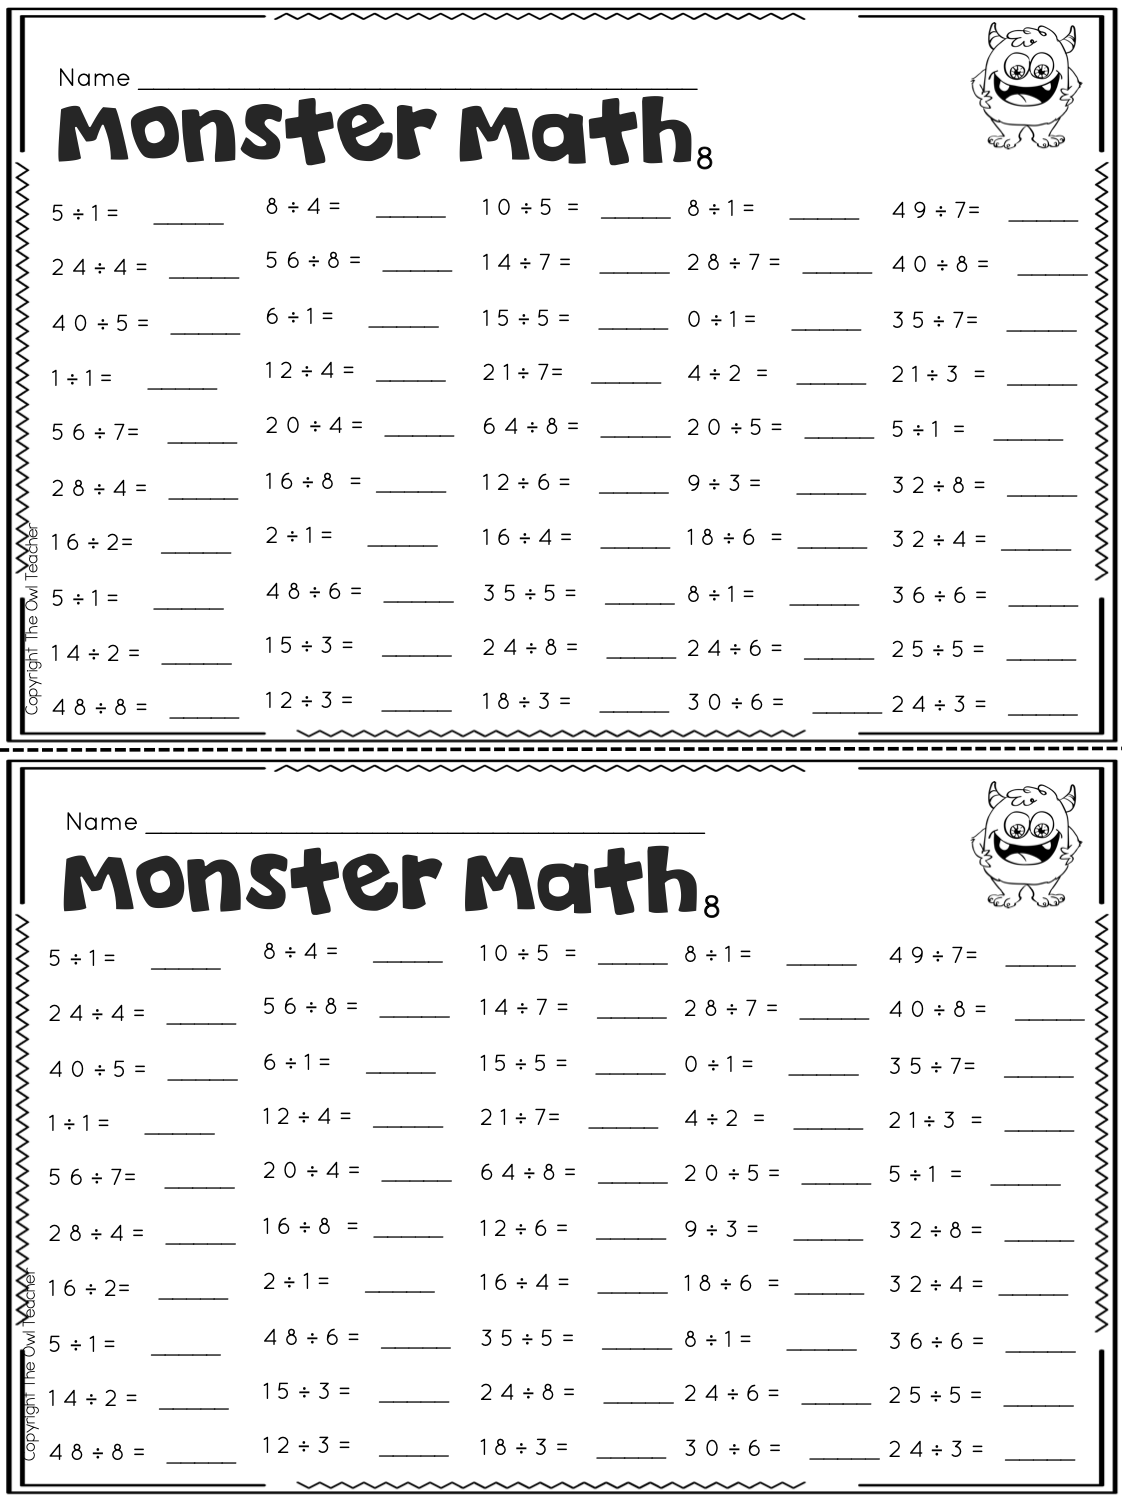 Multiplication Fluency Worksheets Free Printable Pdf